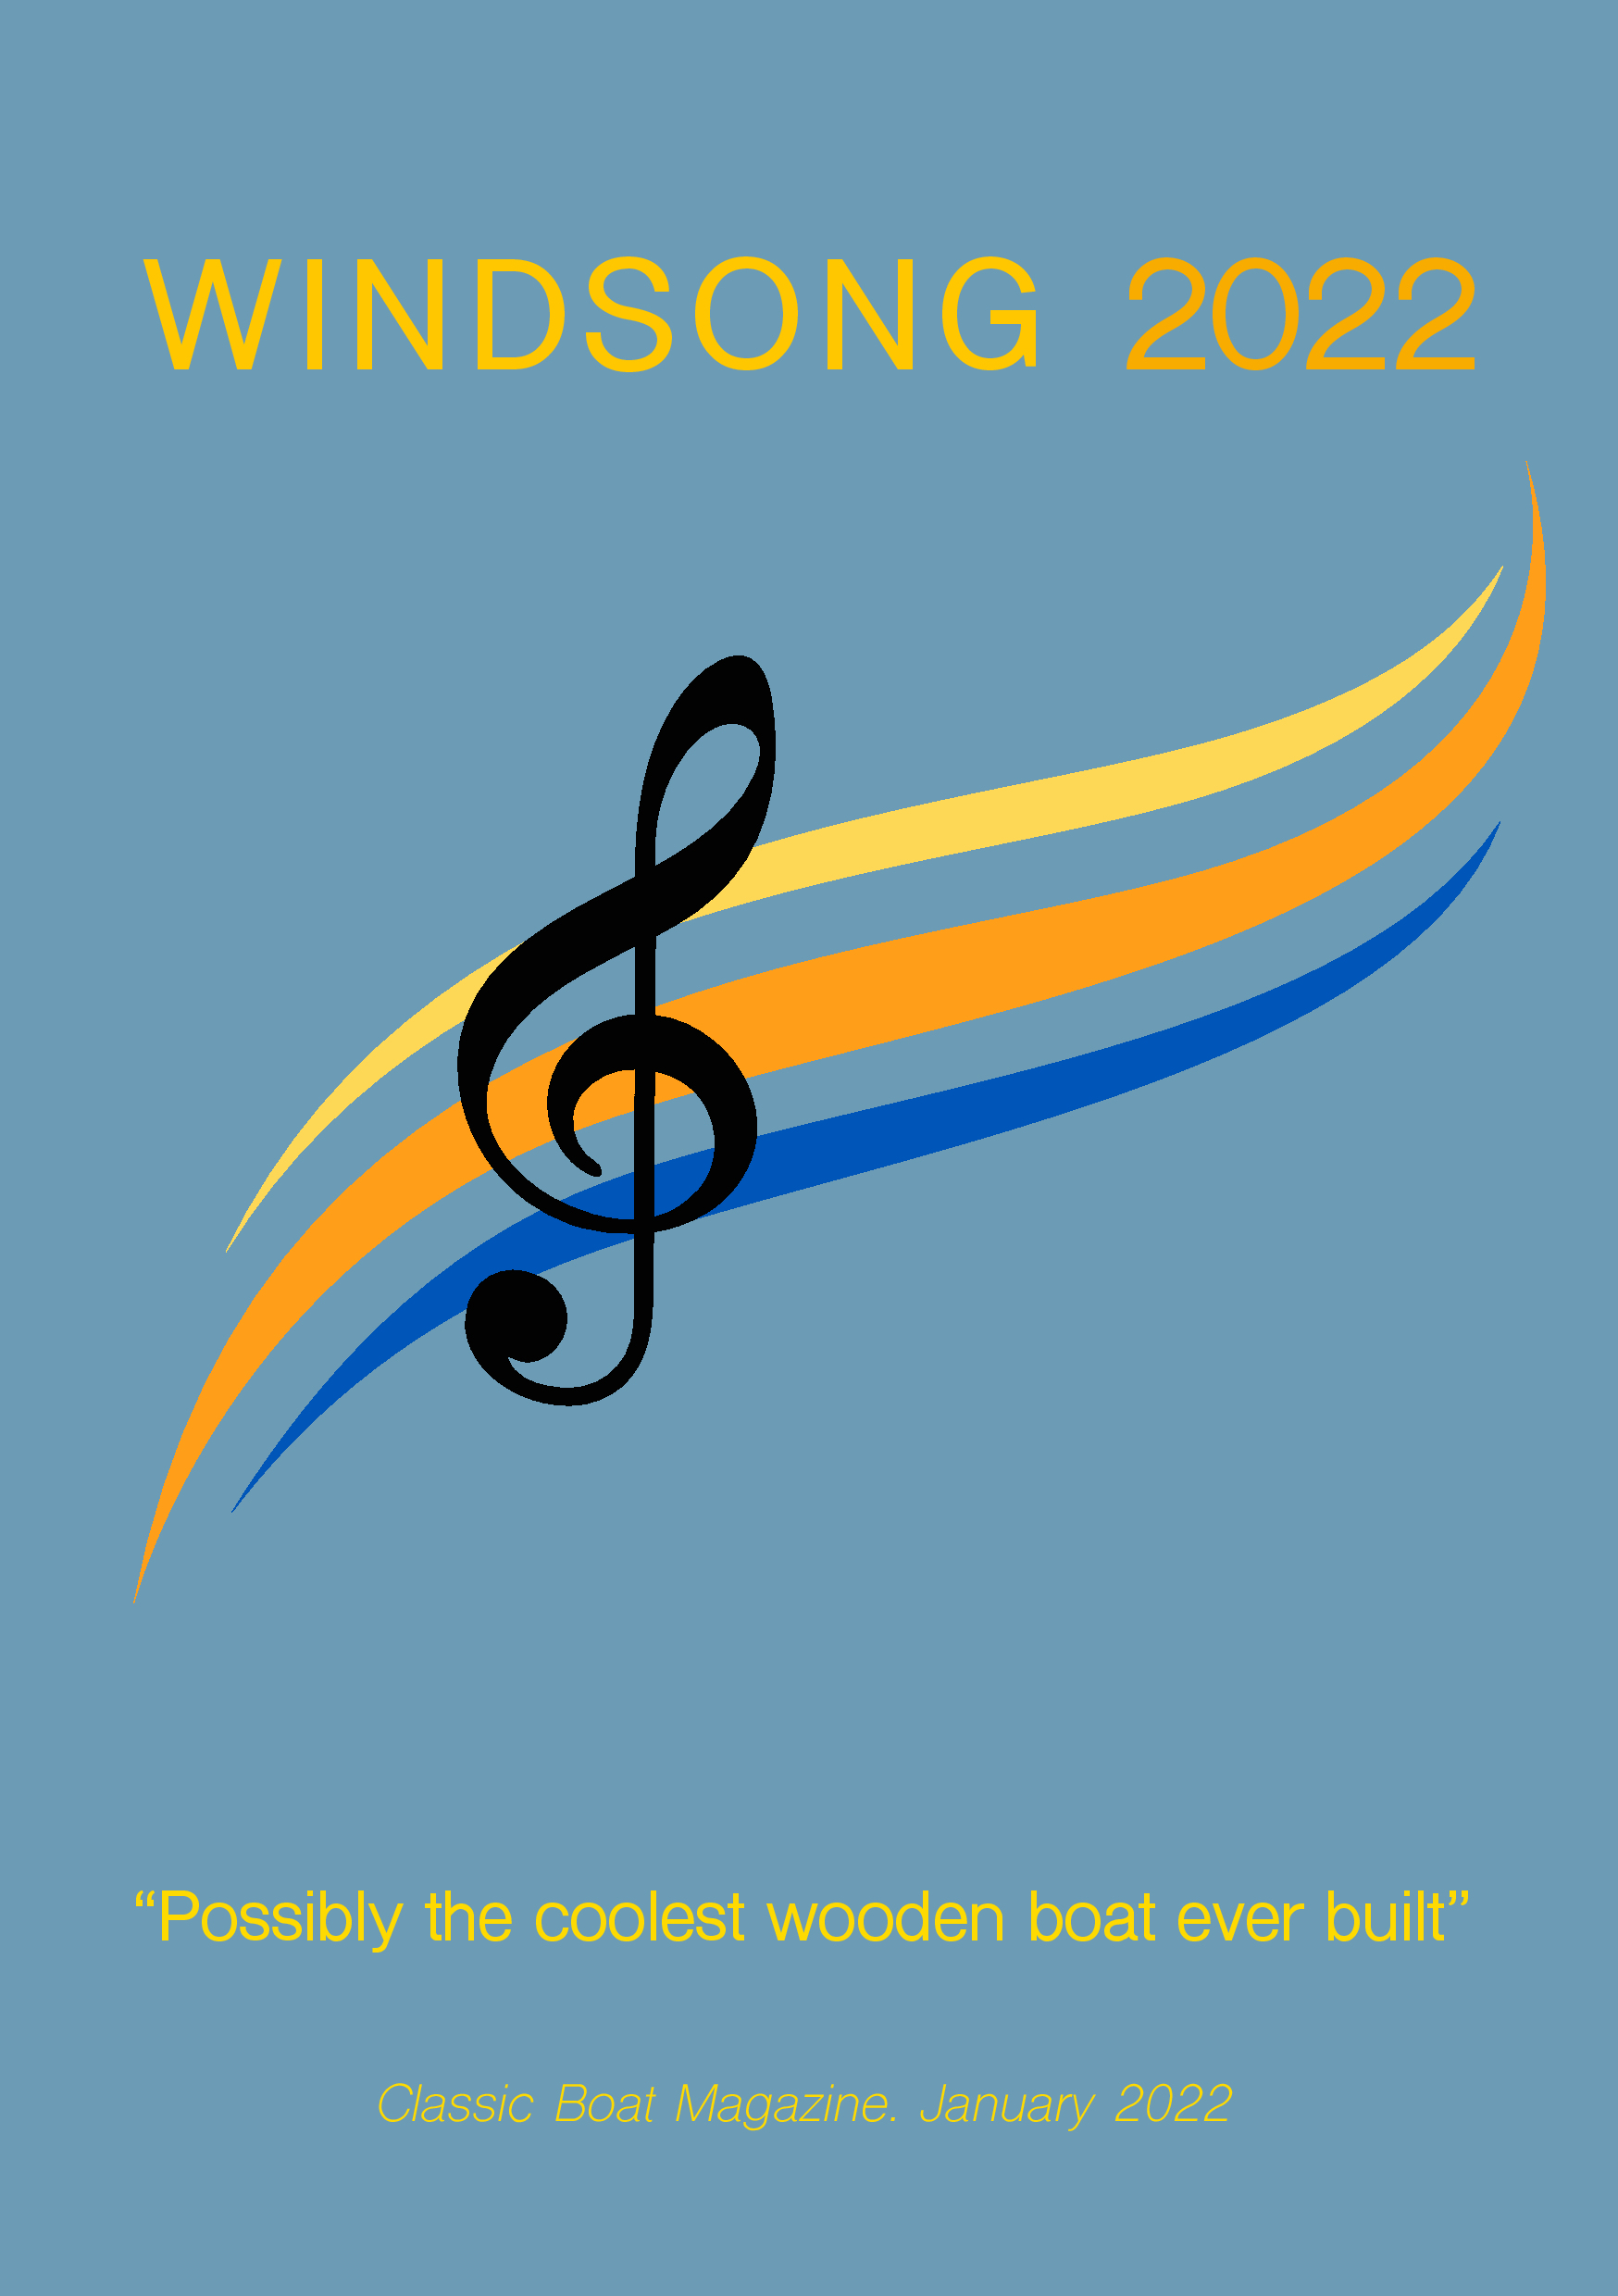 Download The Windsong Brochure